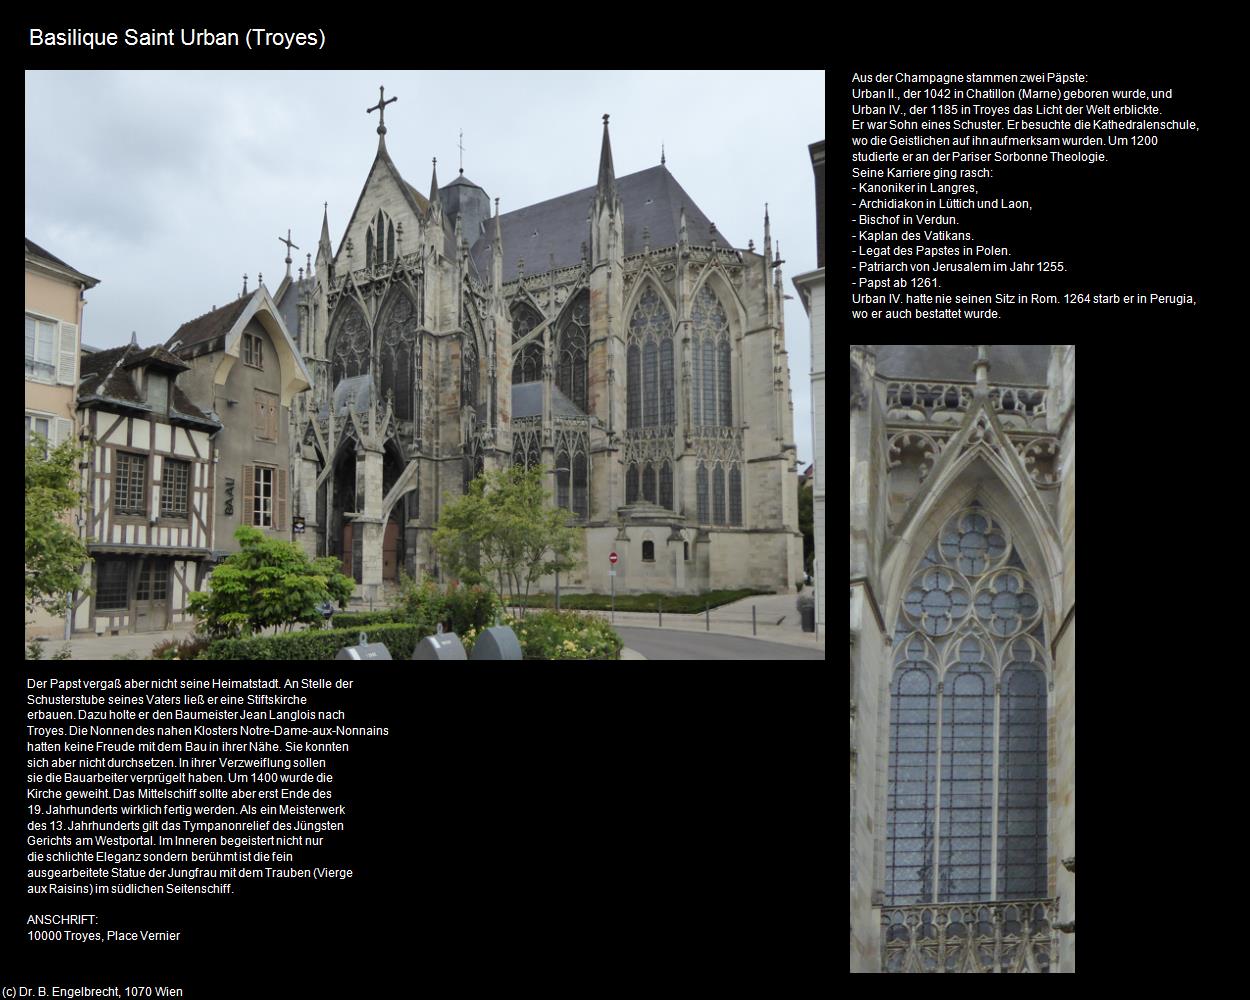 Basilique Saint Urban (Troyes (FR-GES)) in Kulturatlas-FRANKREICH